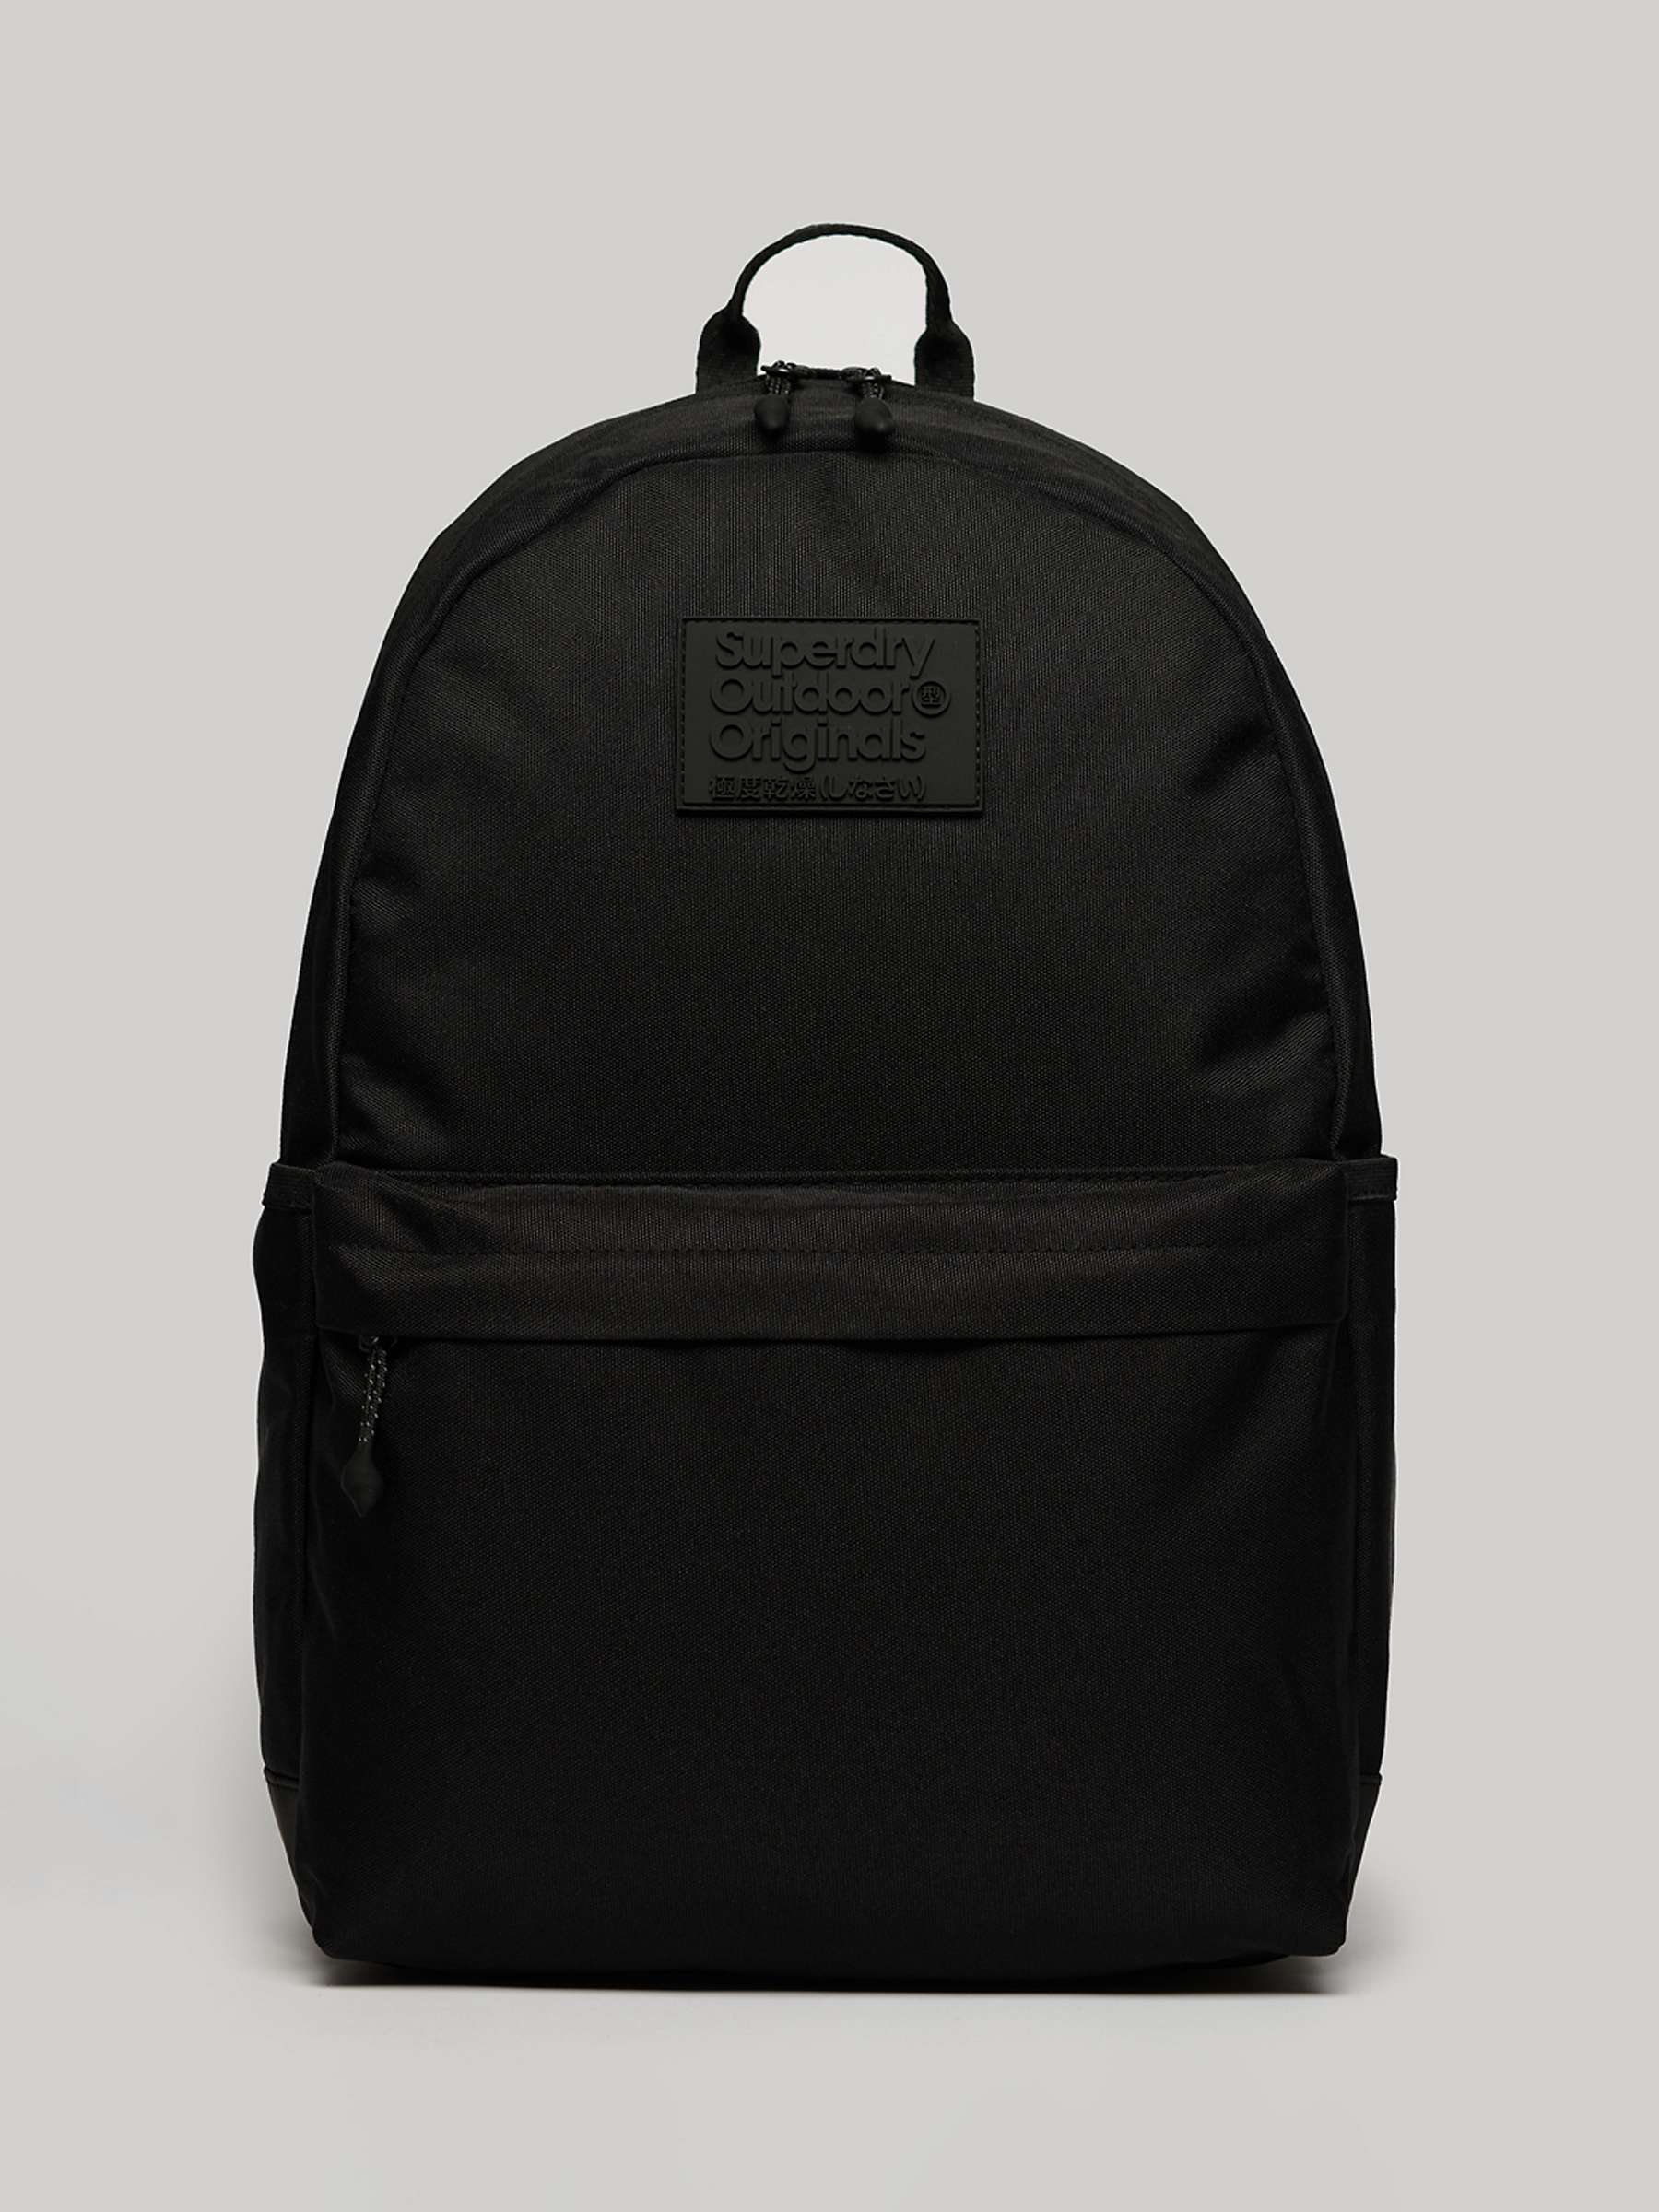 Buy Superdry Original Montana Backpack Online at johnlewis.com